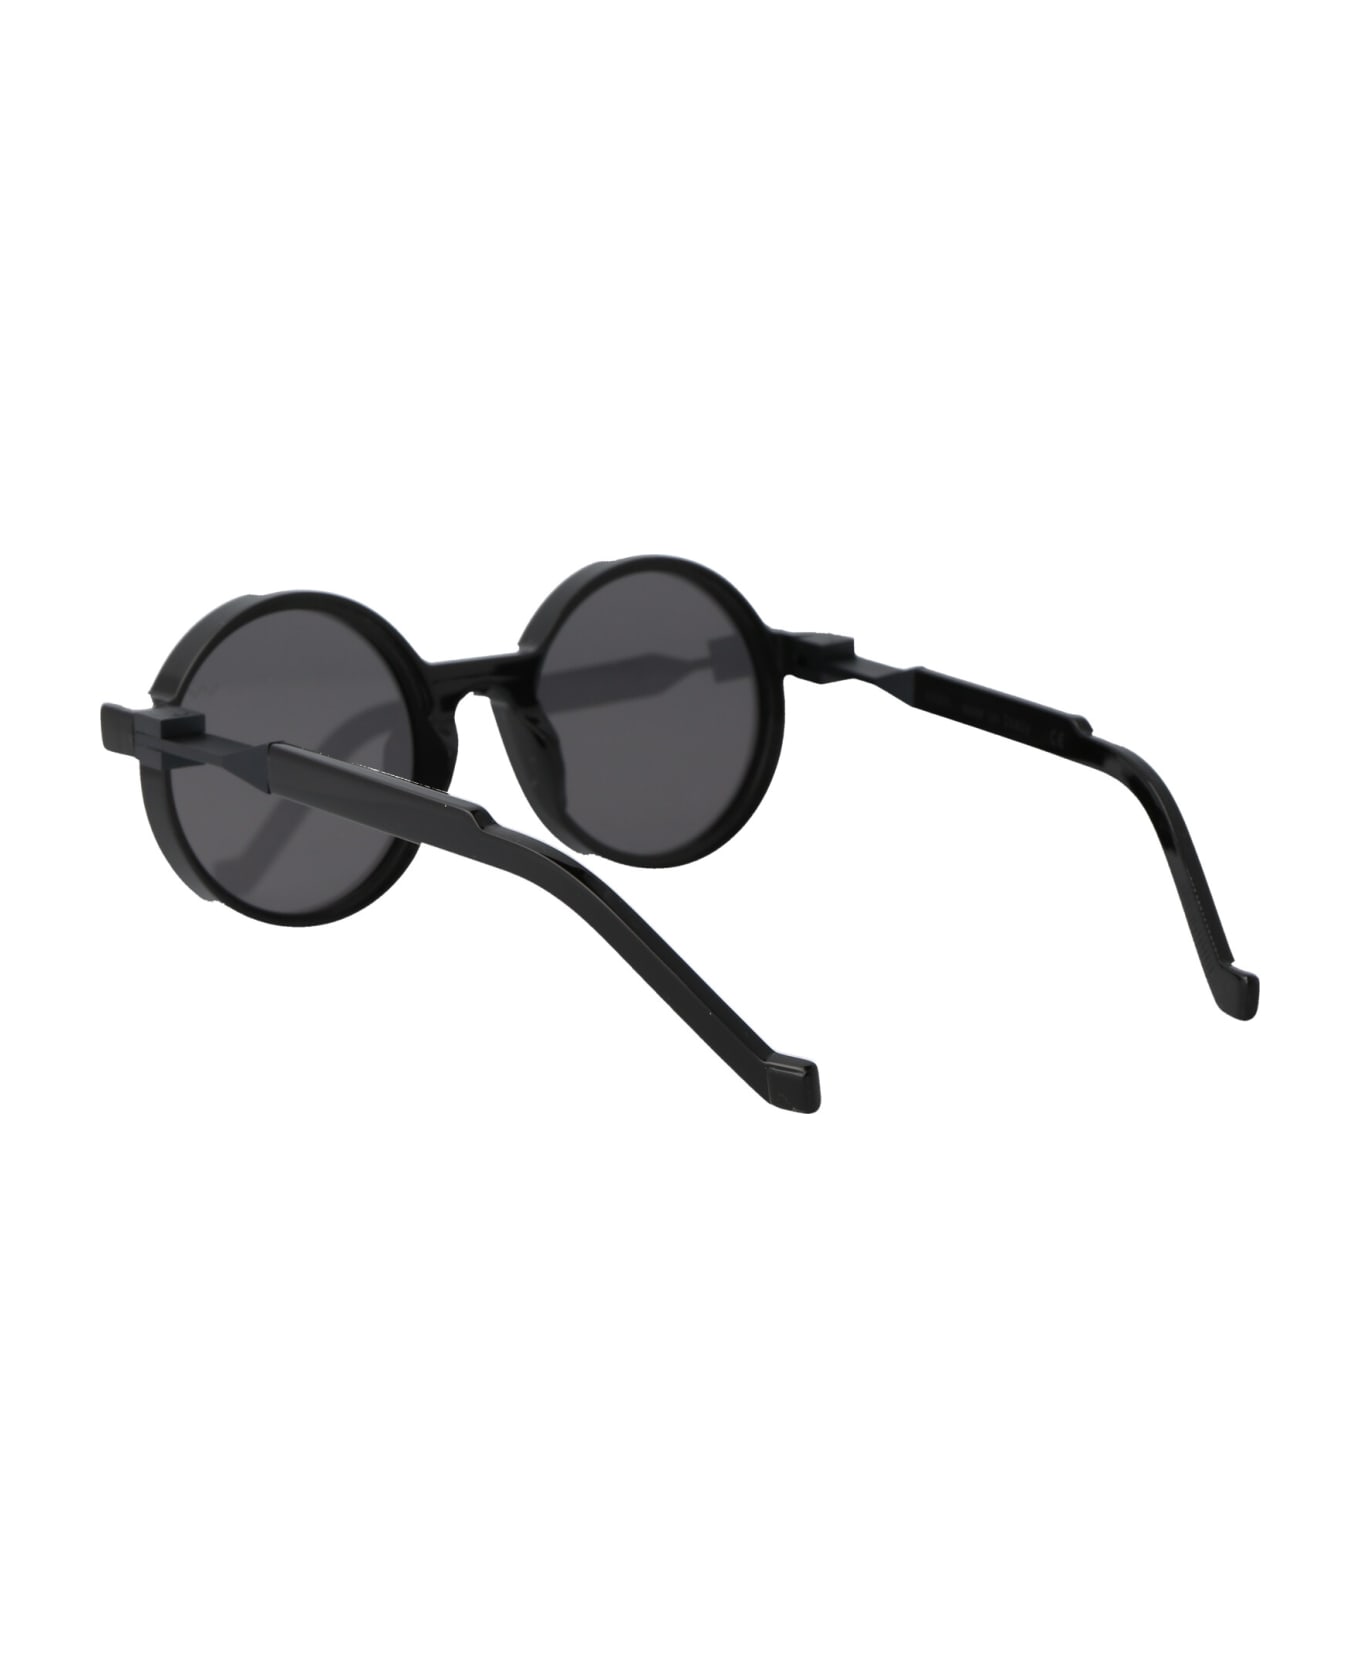 VAVA Wl0000 Sunglasses - BLACK|BLACK HINGES|BLACK LENSES